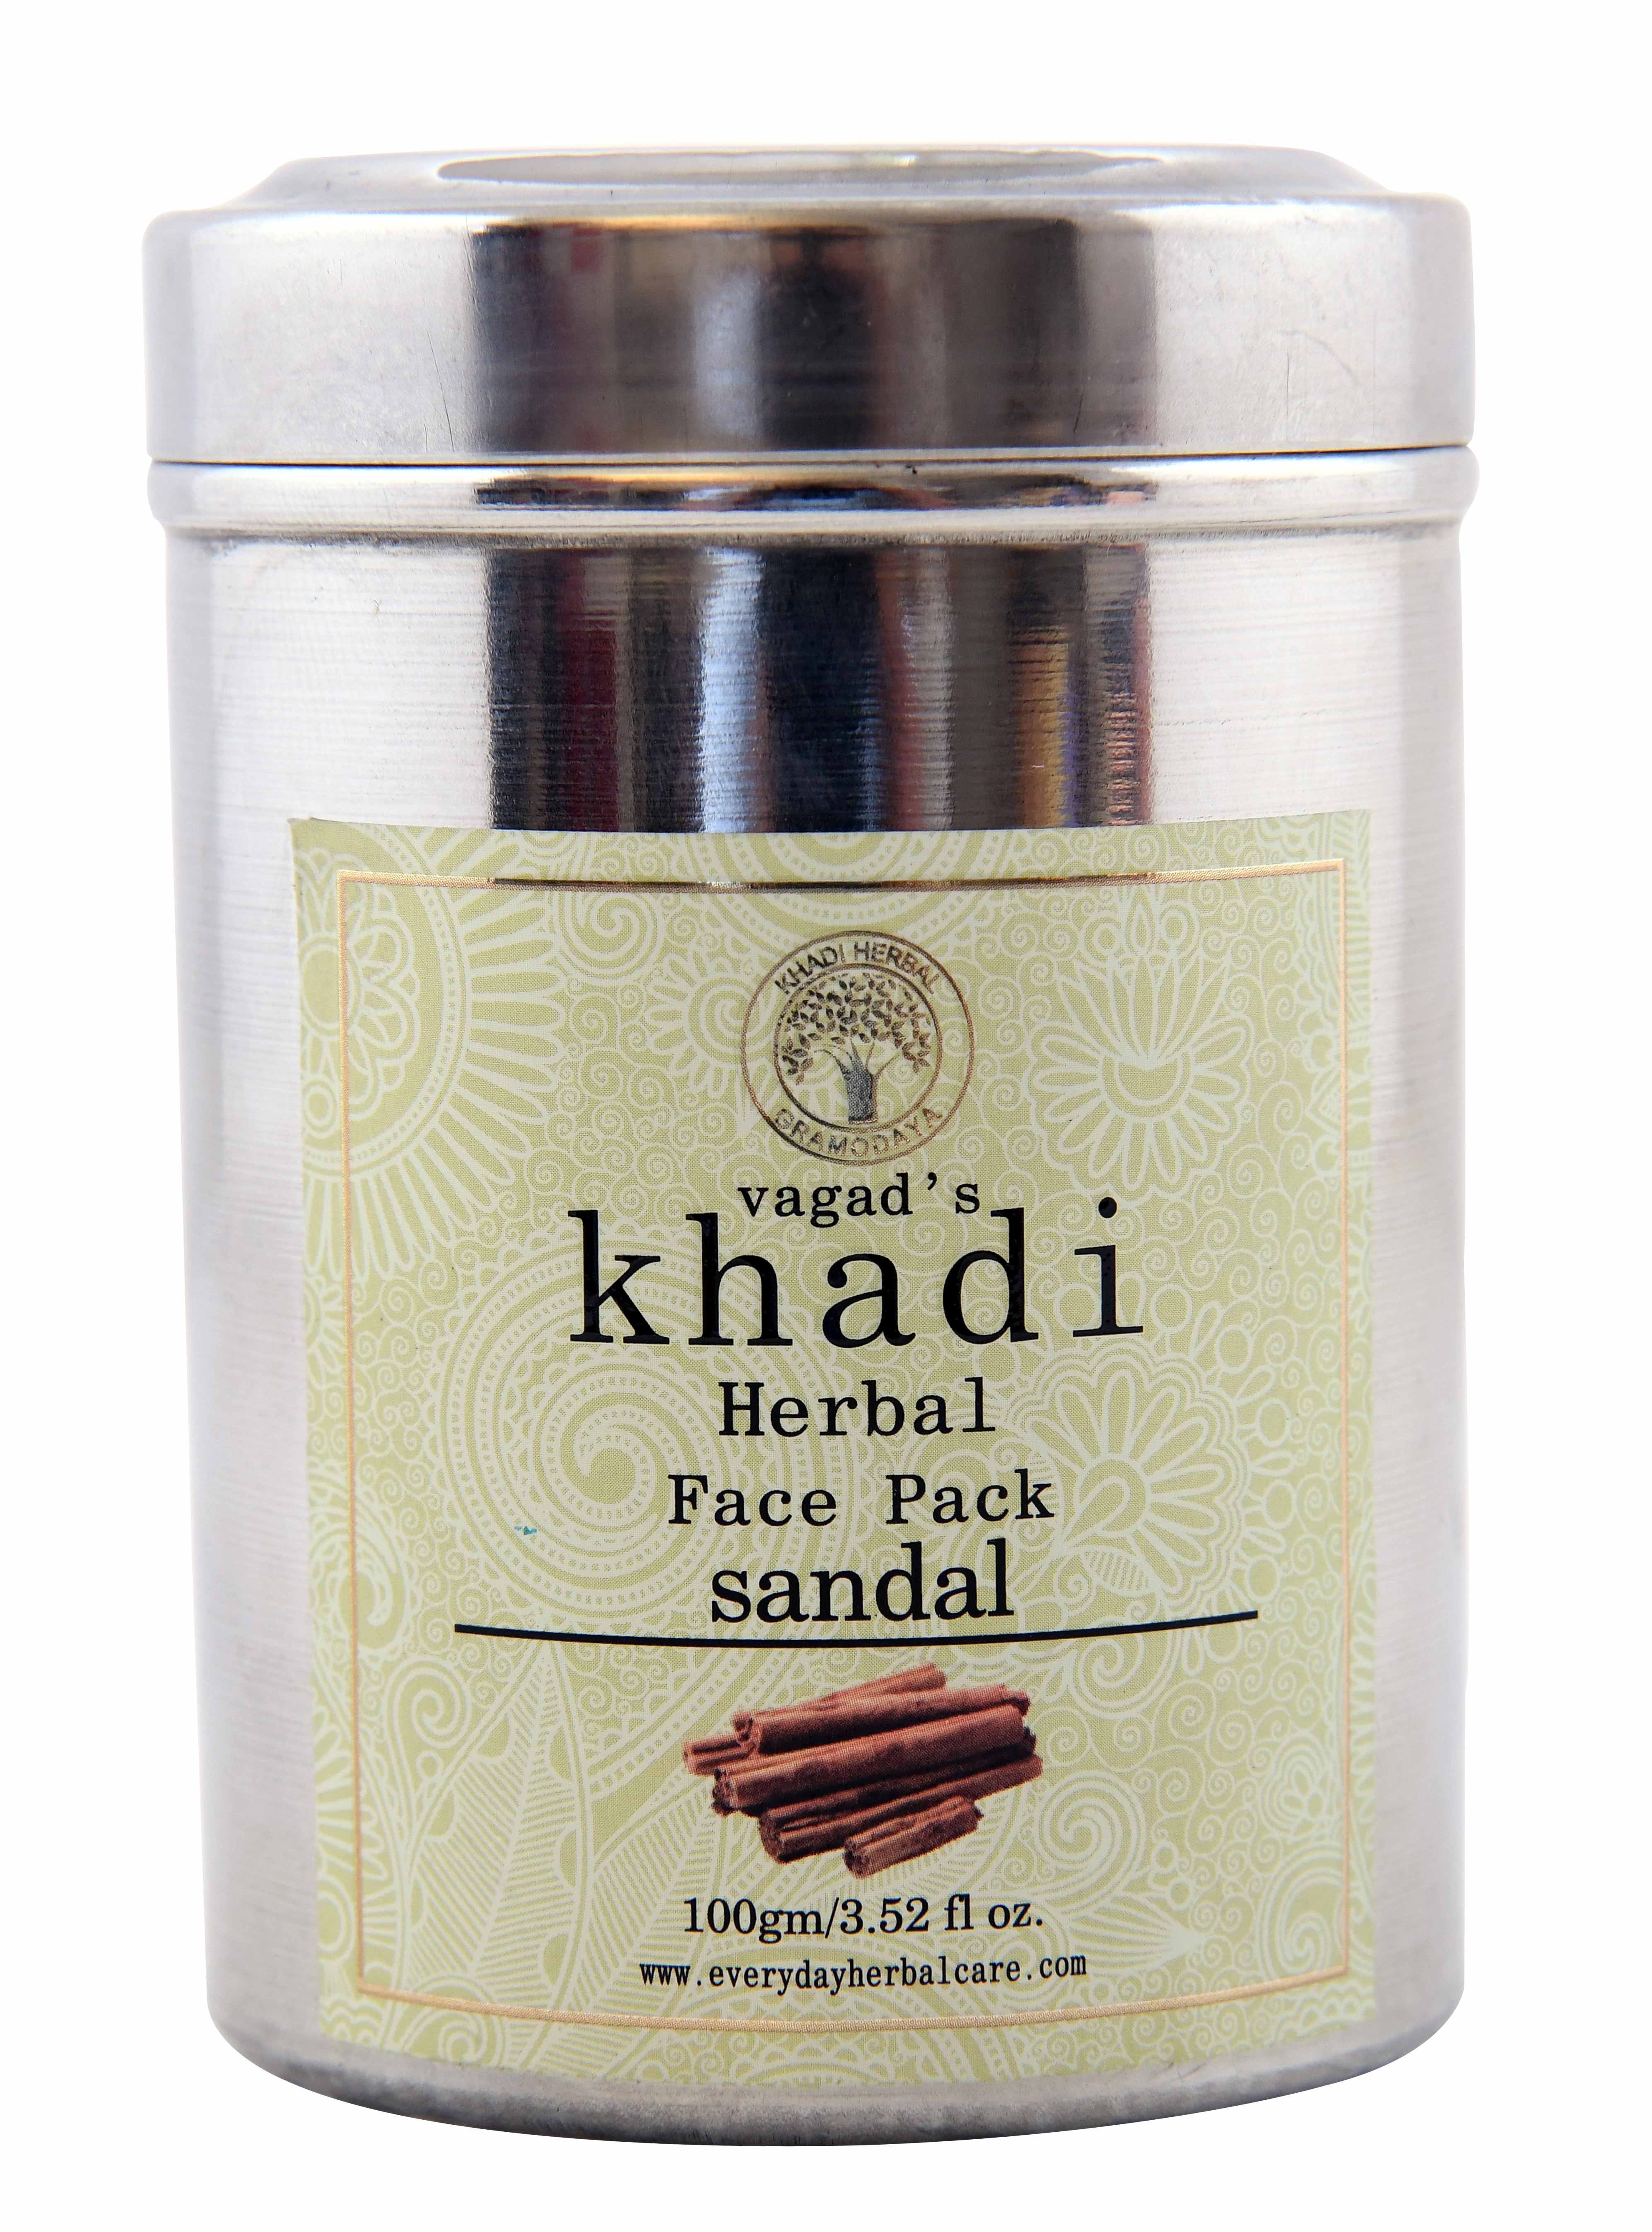 Buy Vagad's Khadi Sandal Wood Face Pack at Best Price Online